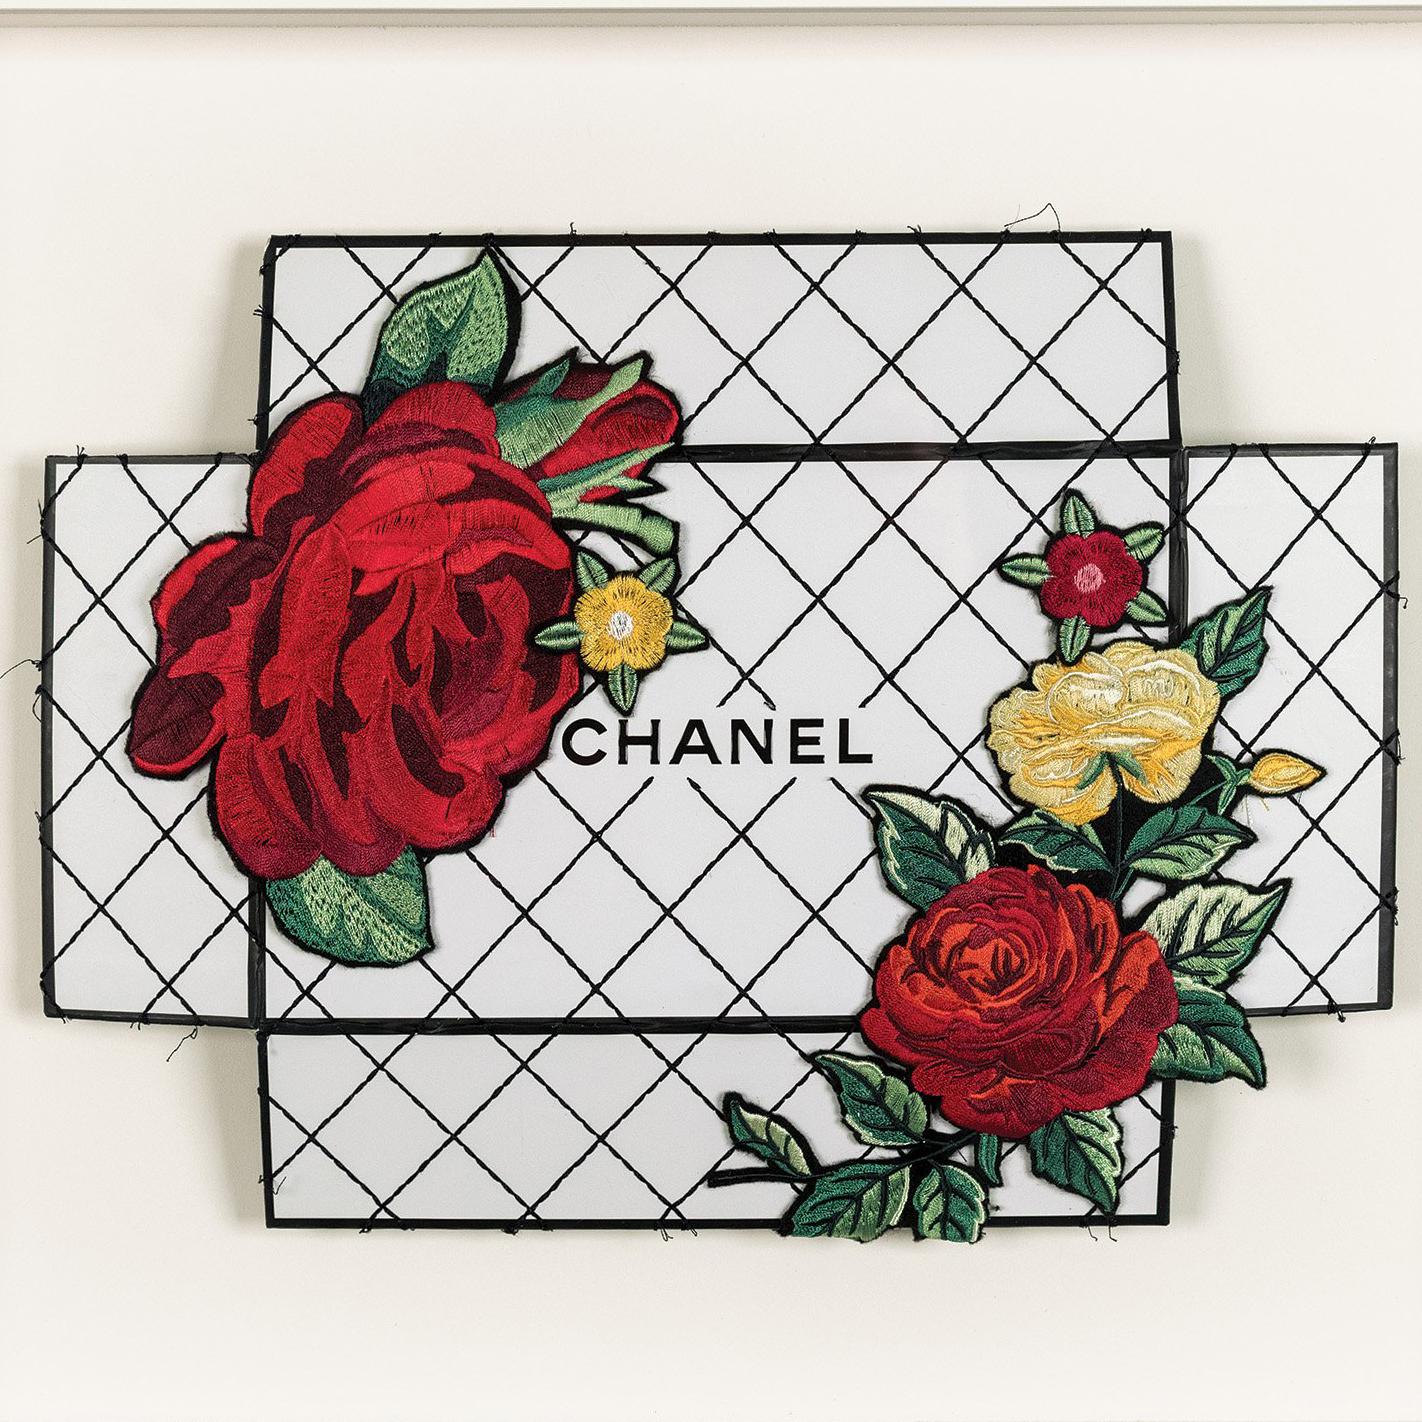 Red Rose - Chanel - Contemporain Mixed Media Art par Stephen Wilson